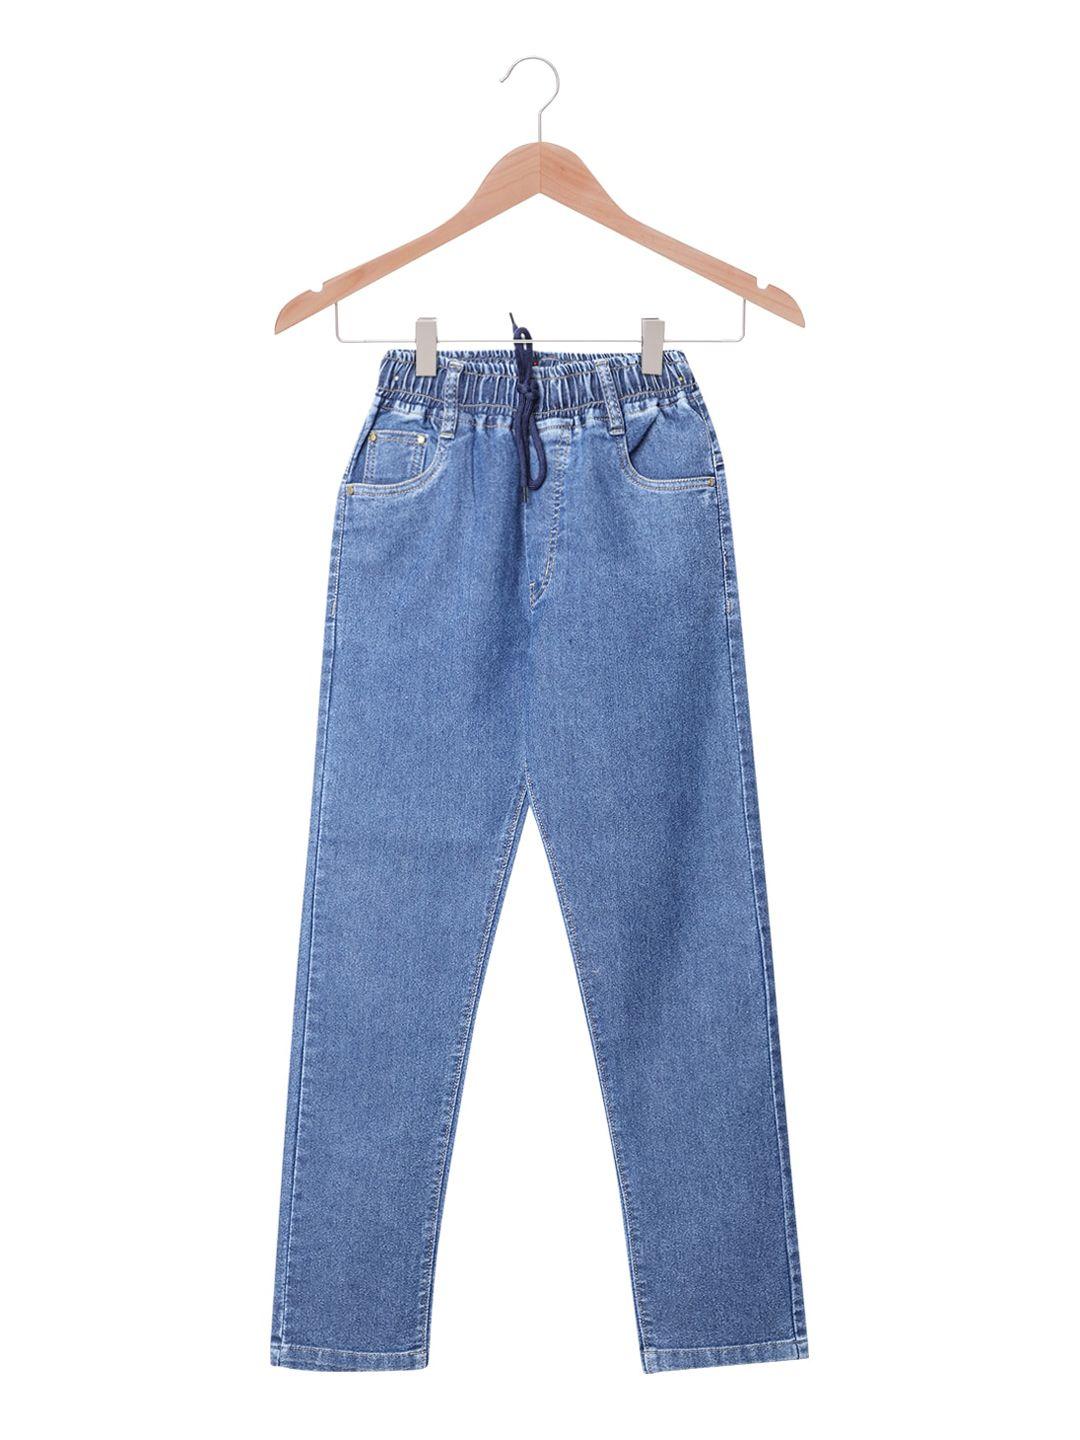 killer-boys-jogger-clean-look-mid-rise-cotton-jeans